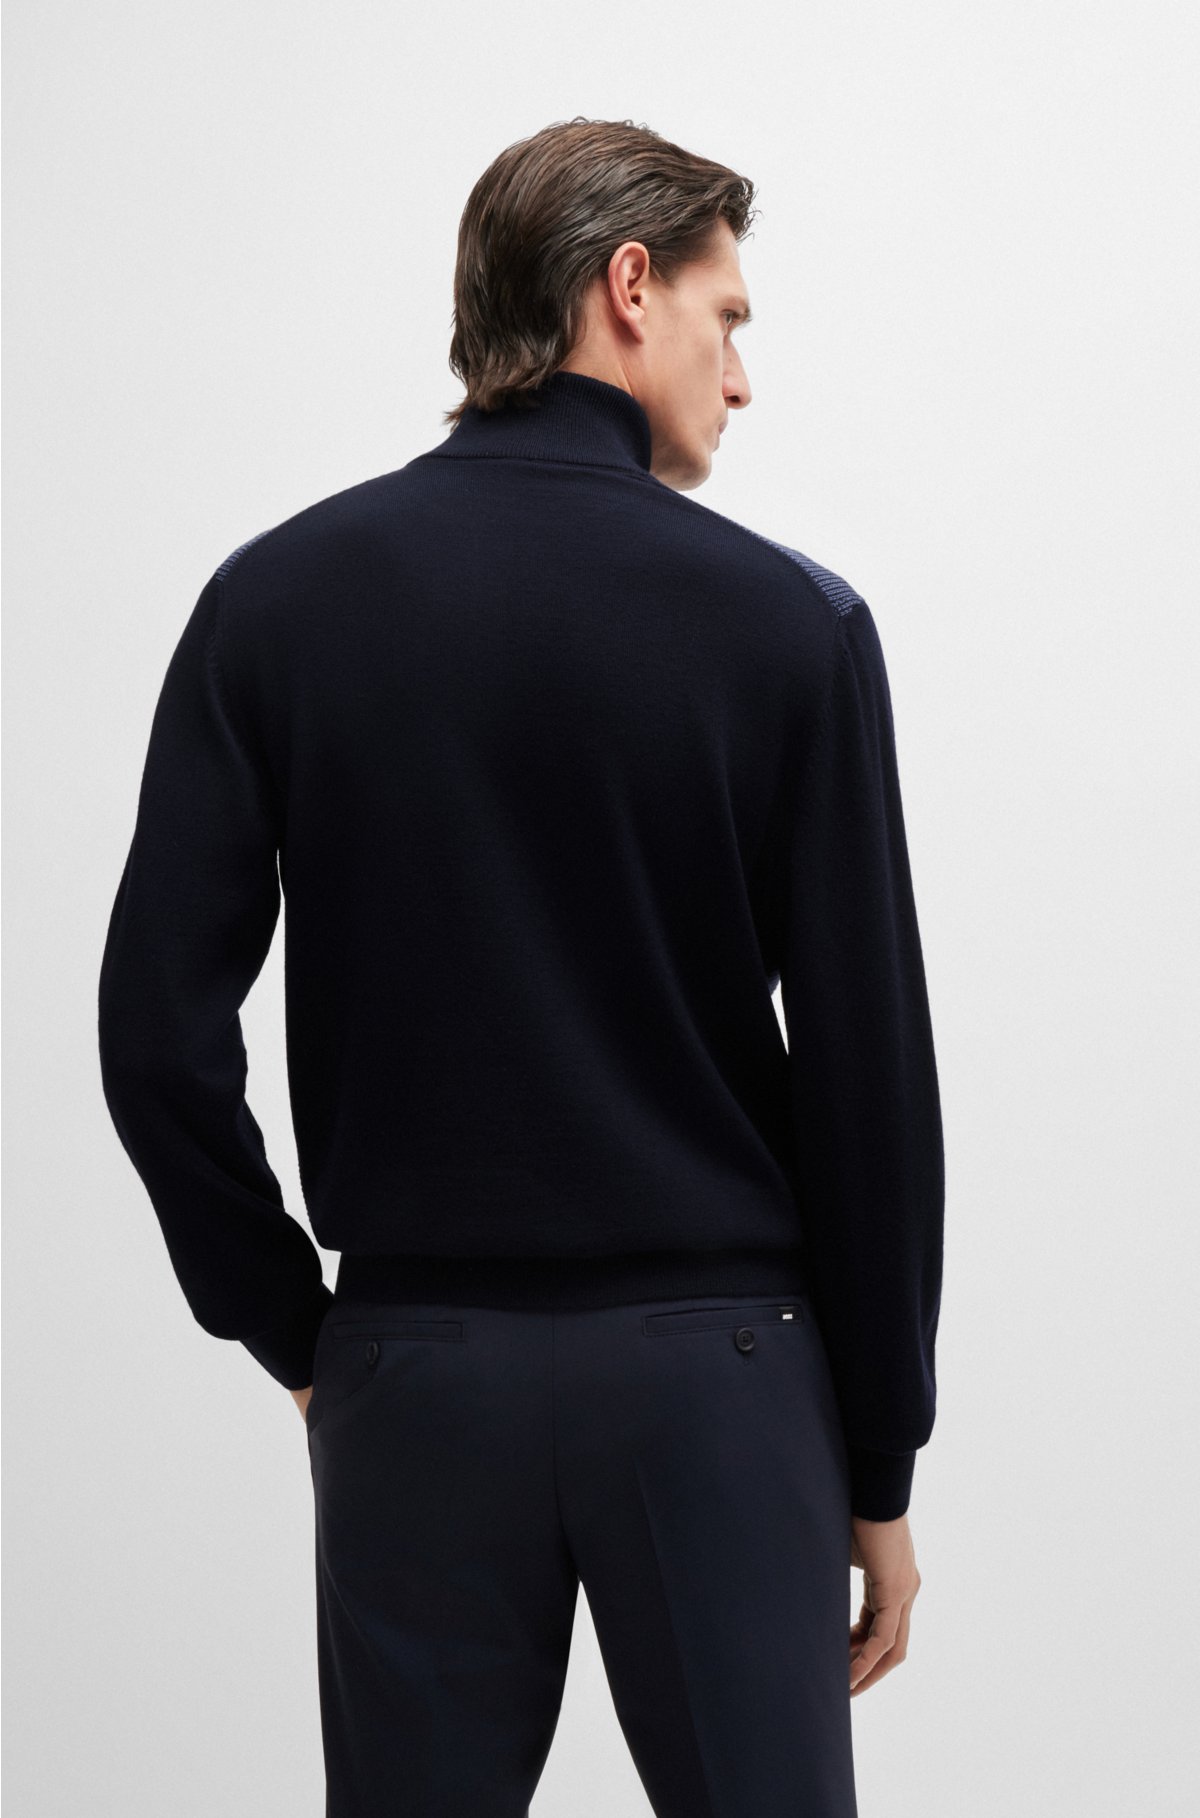 Virgin-wool zip-neck sweater with mixed structures, Dark Blue